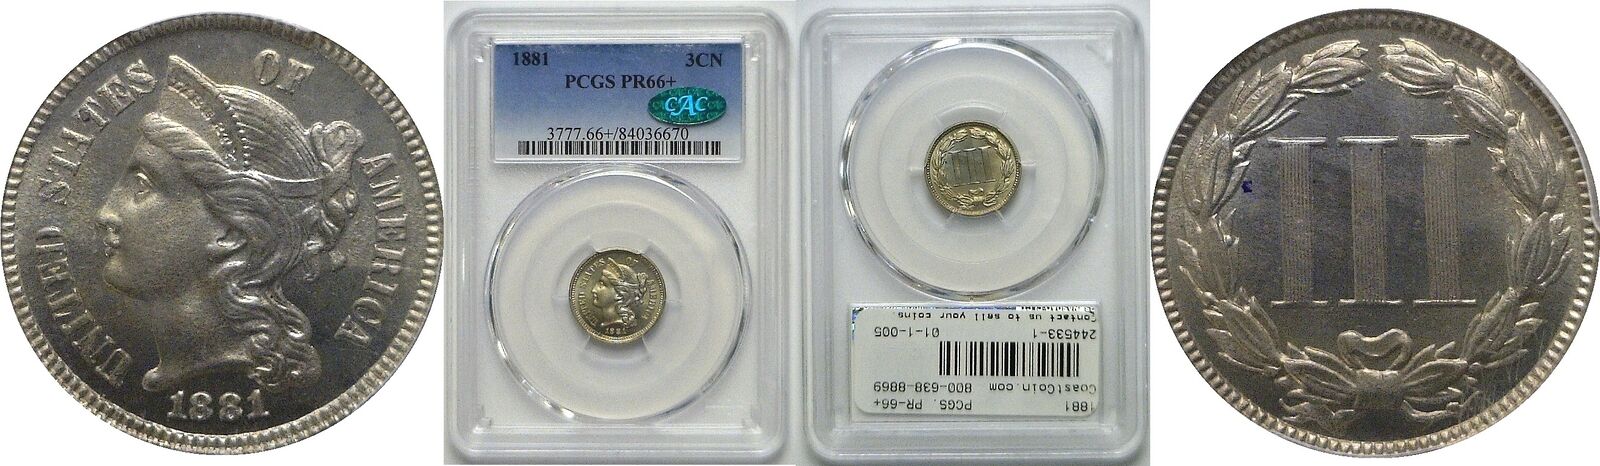 1881 3C Proof Nickel Three Cent Piece PCGS PR-66+ CAC